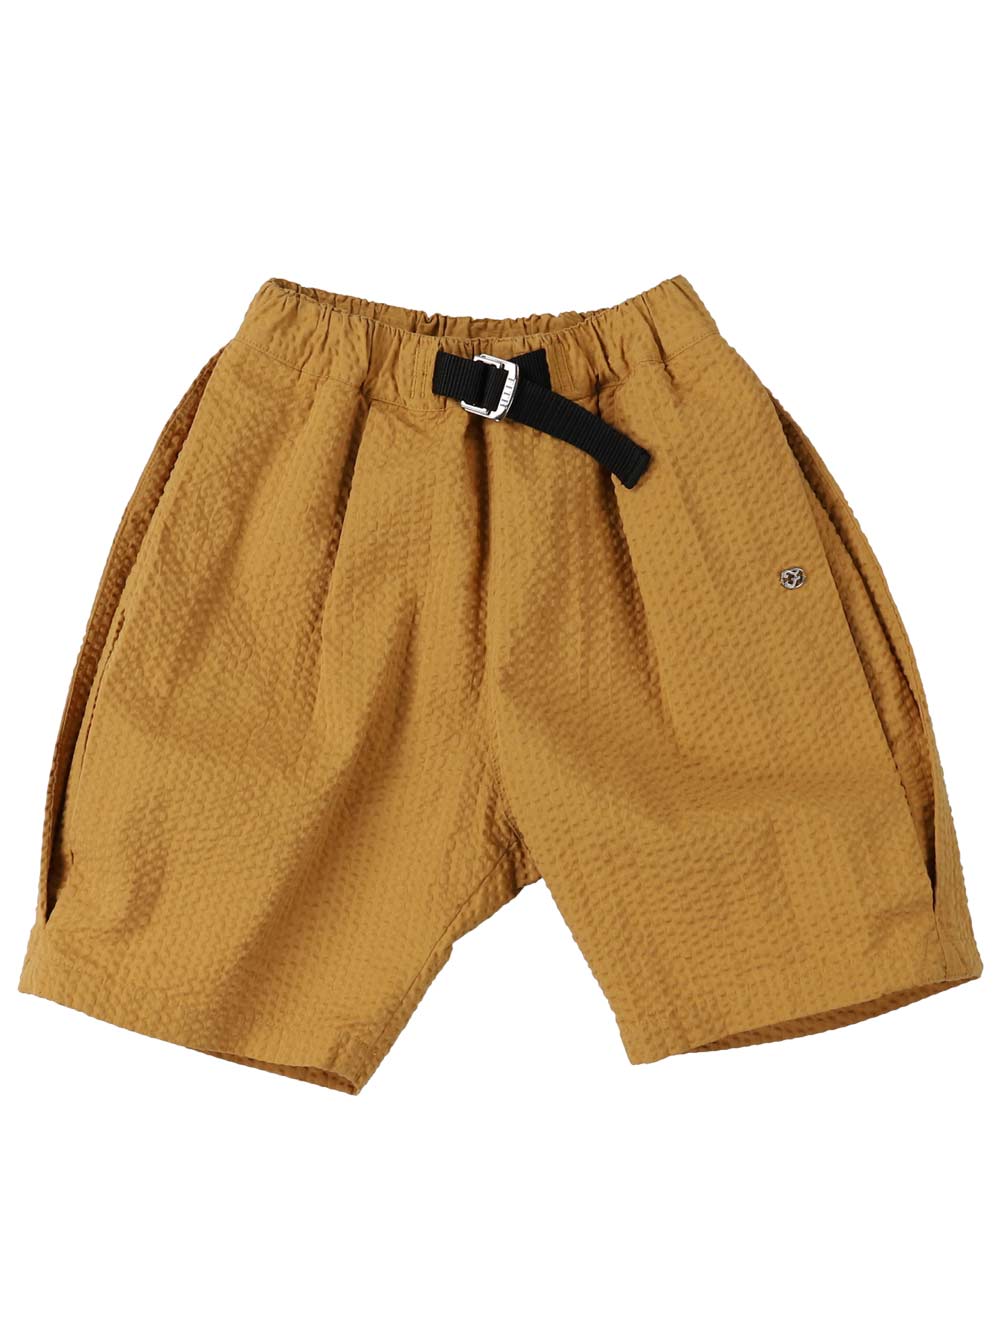 Brown Coolmax Shorts